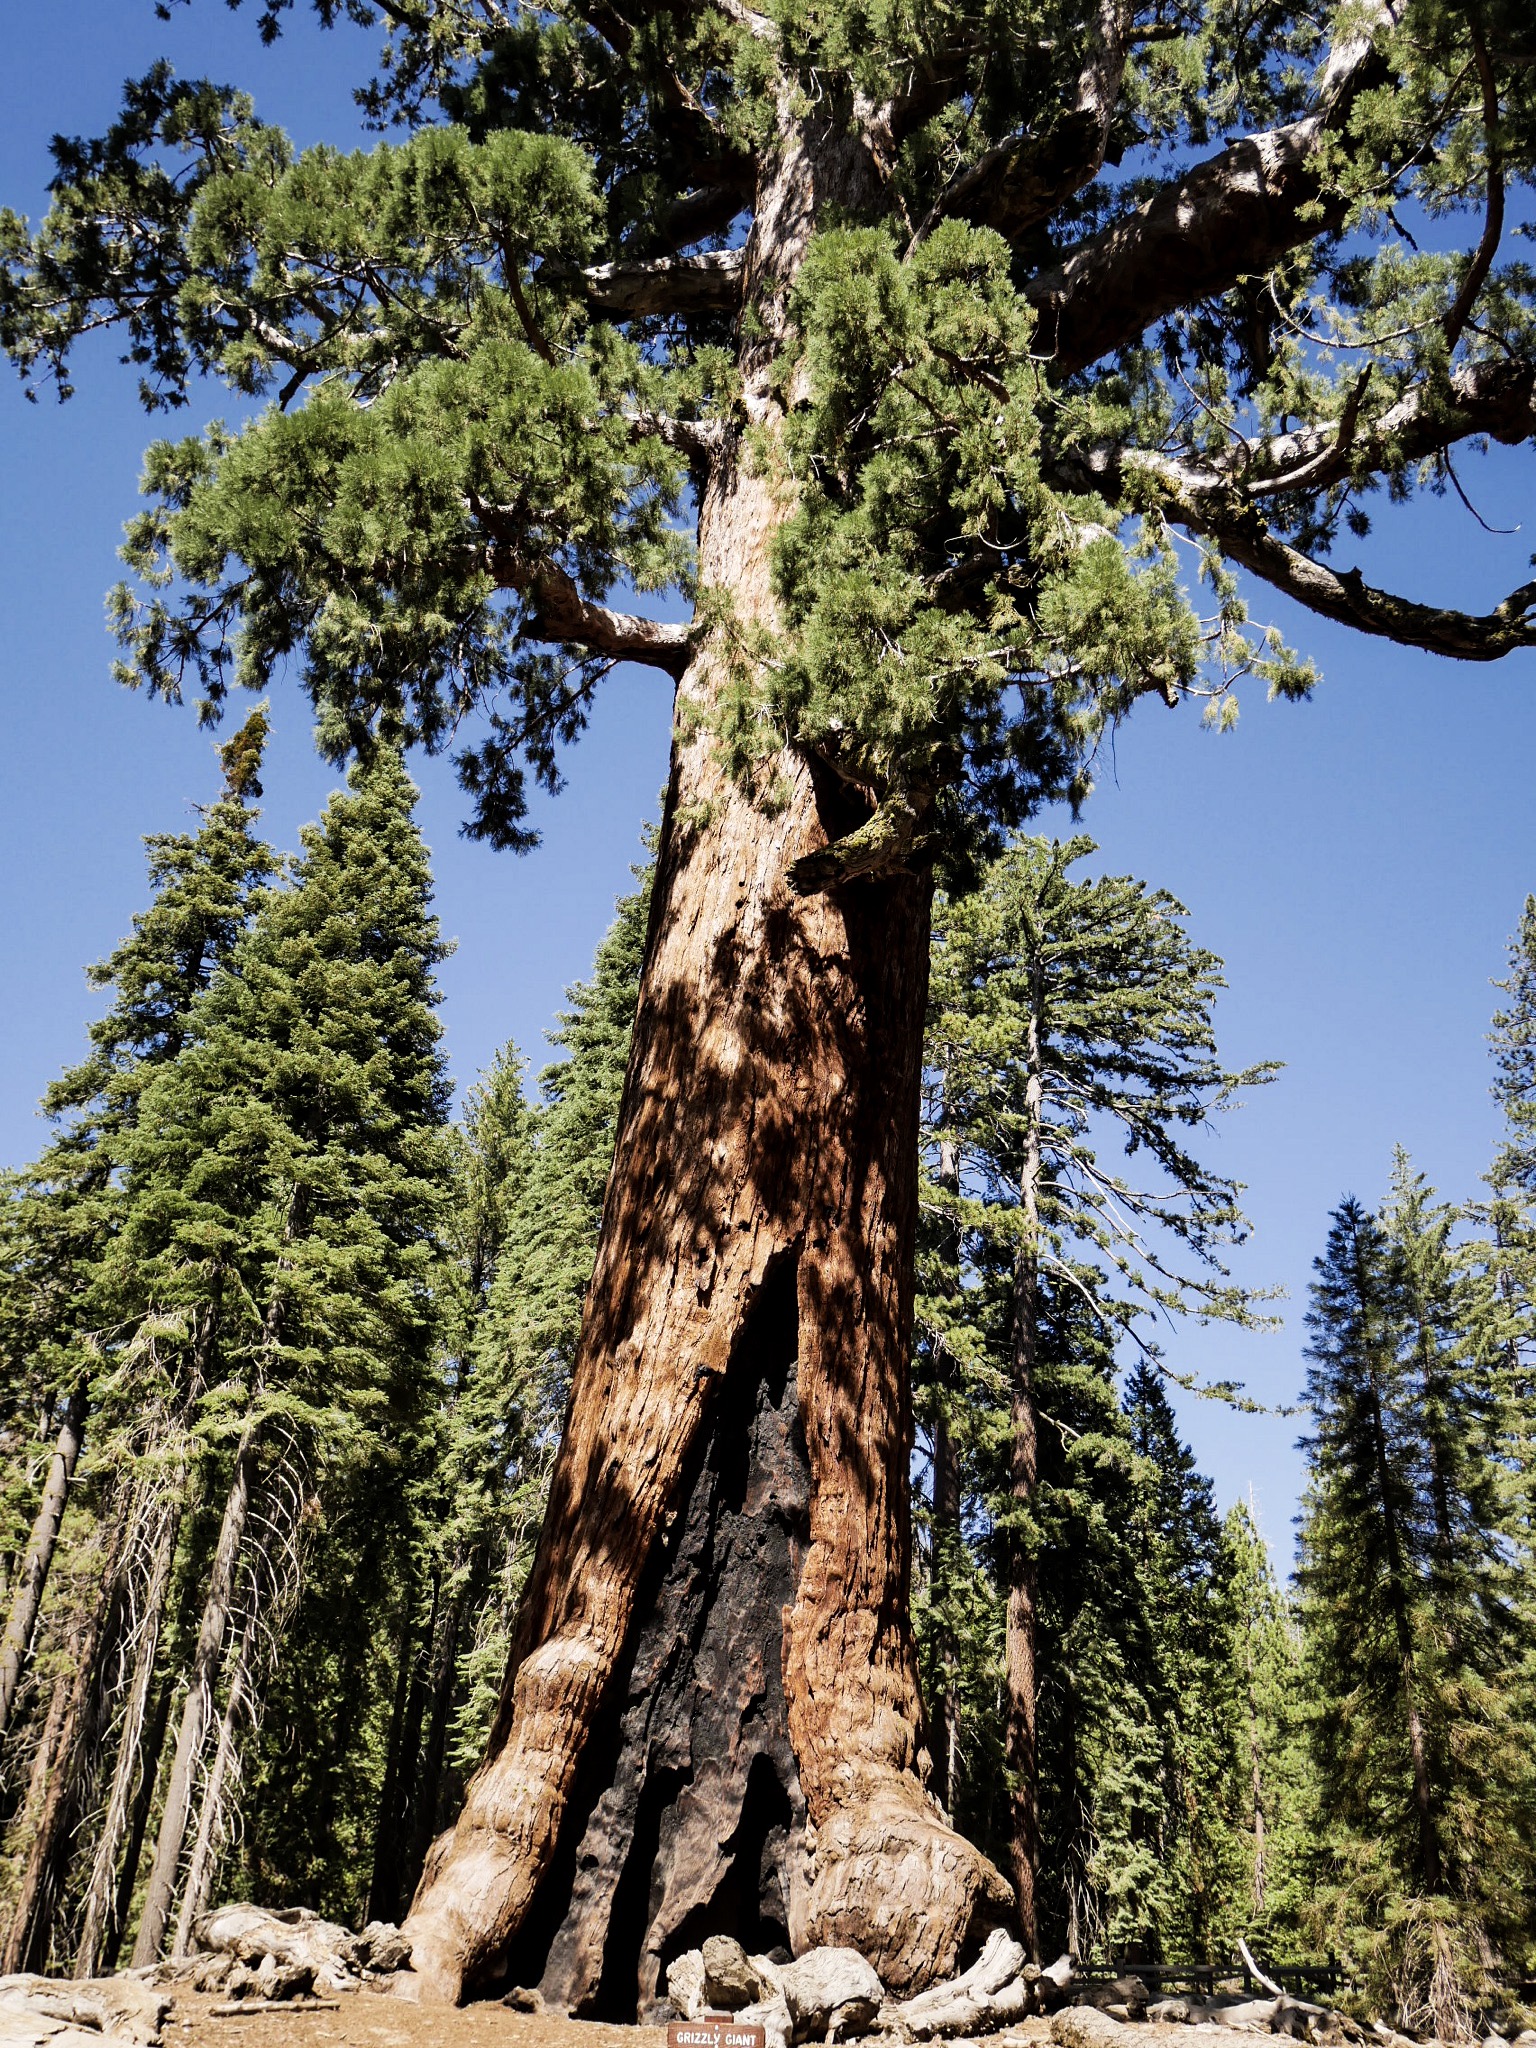 Yosemite National Park: 2-Day Itinerary